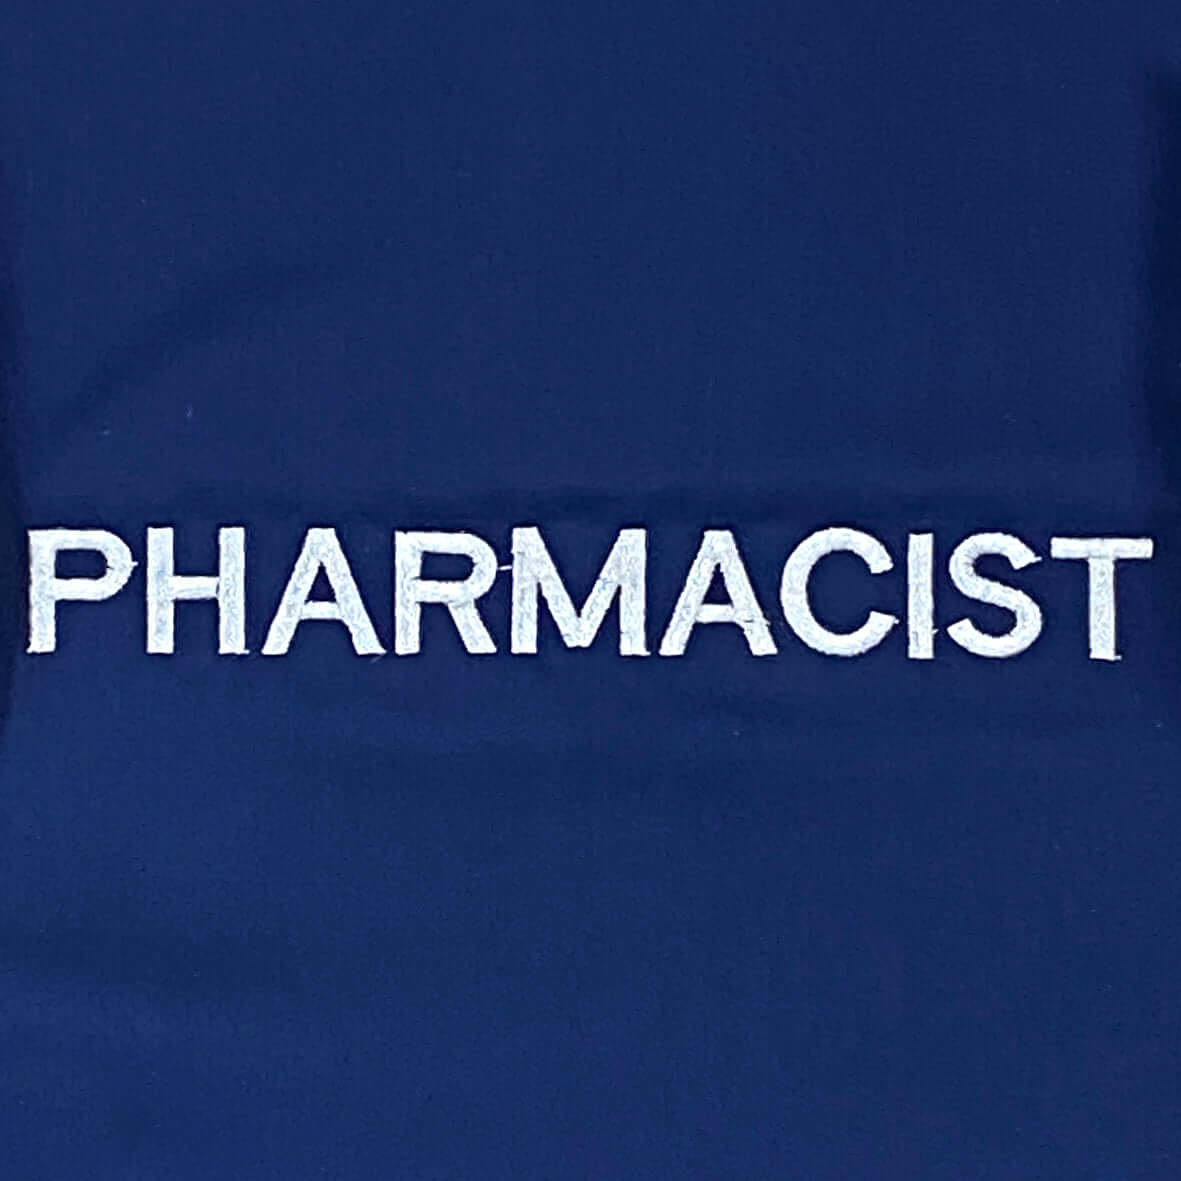 Embroidery Stock Logos - Pharmacist